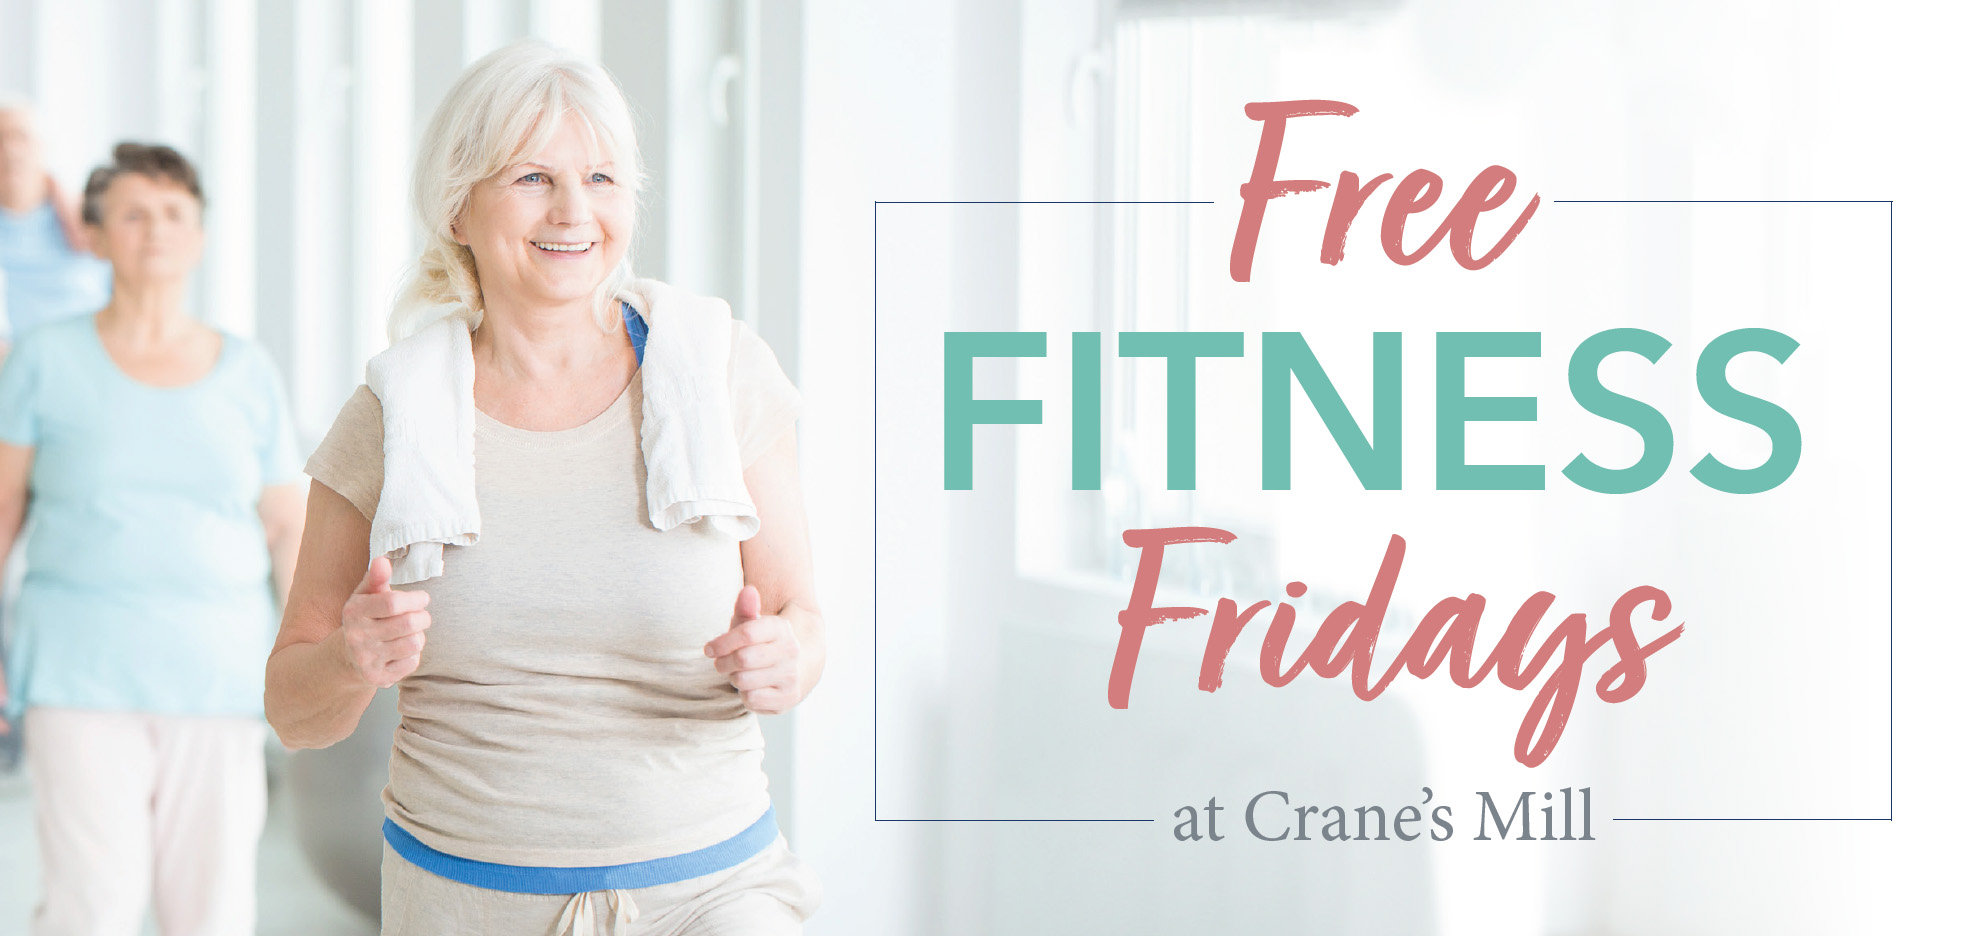 Free Fitness Fridays (Thursday)